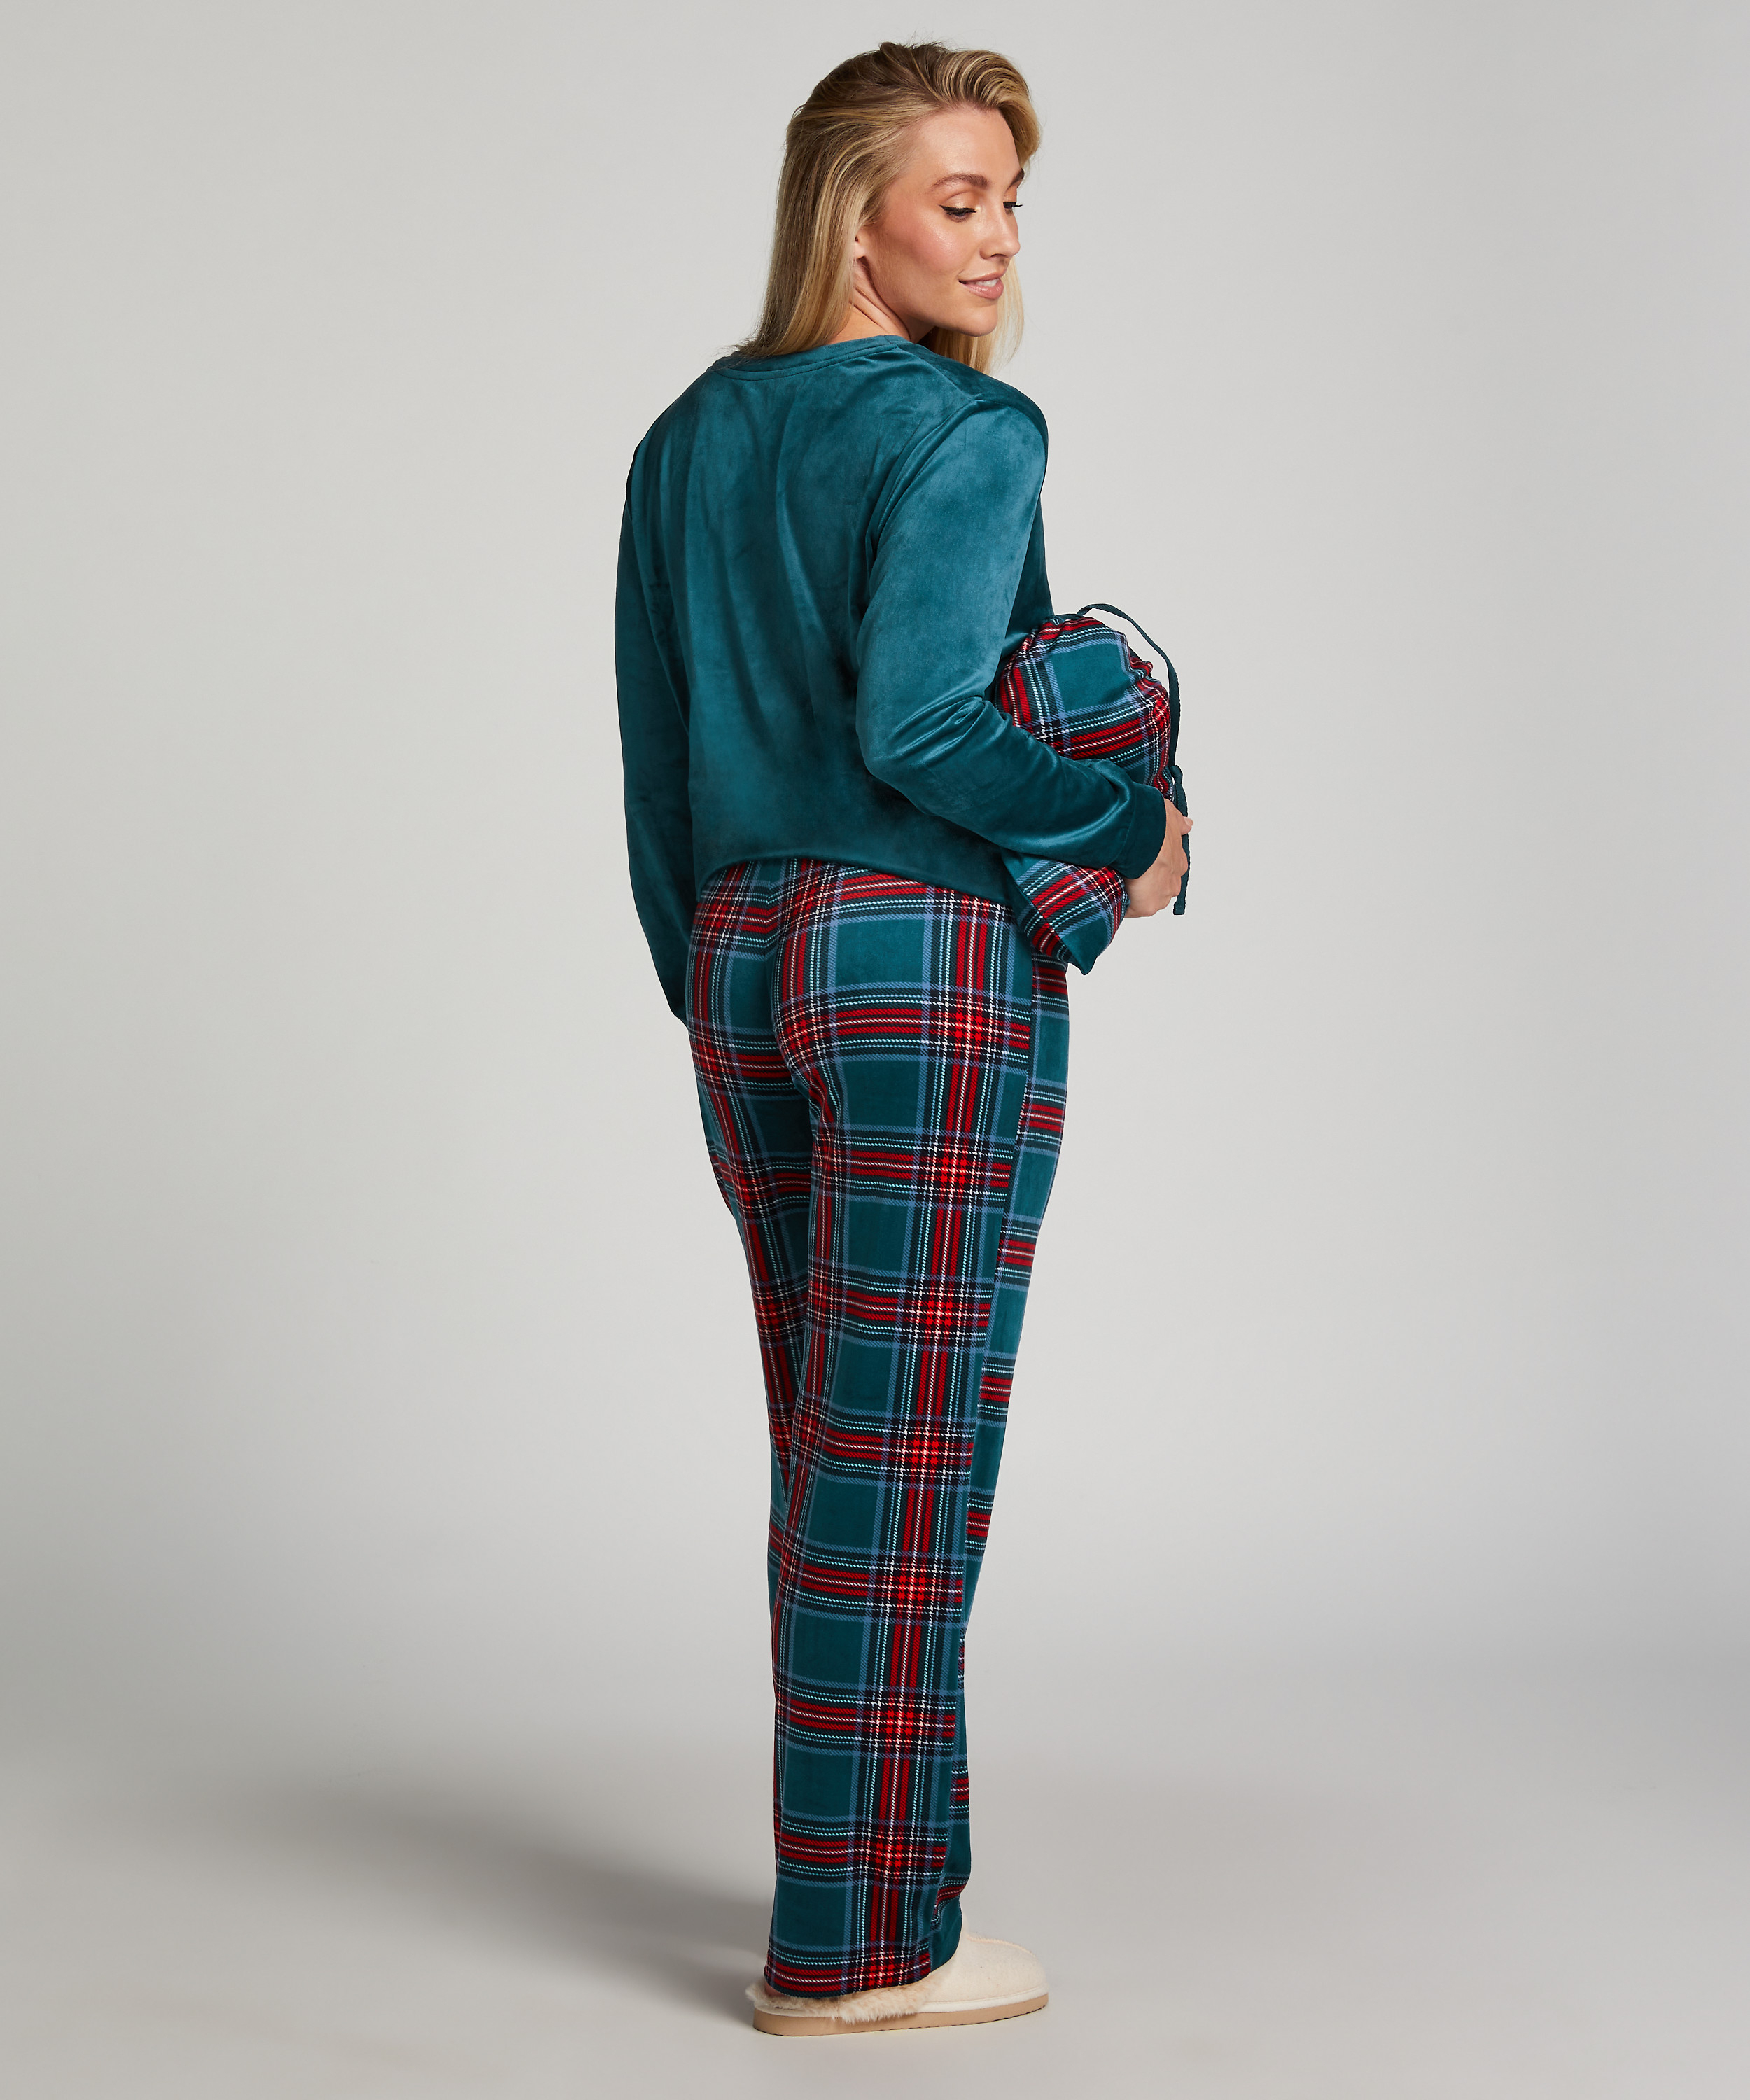 Pyjamaset with Bag, Blue, main